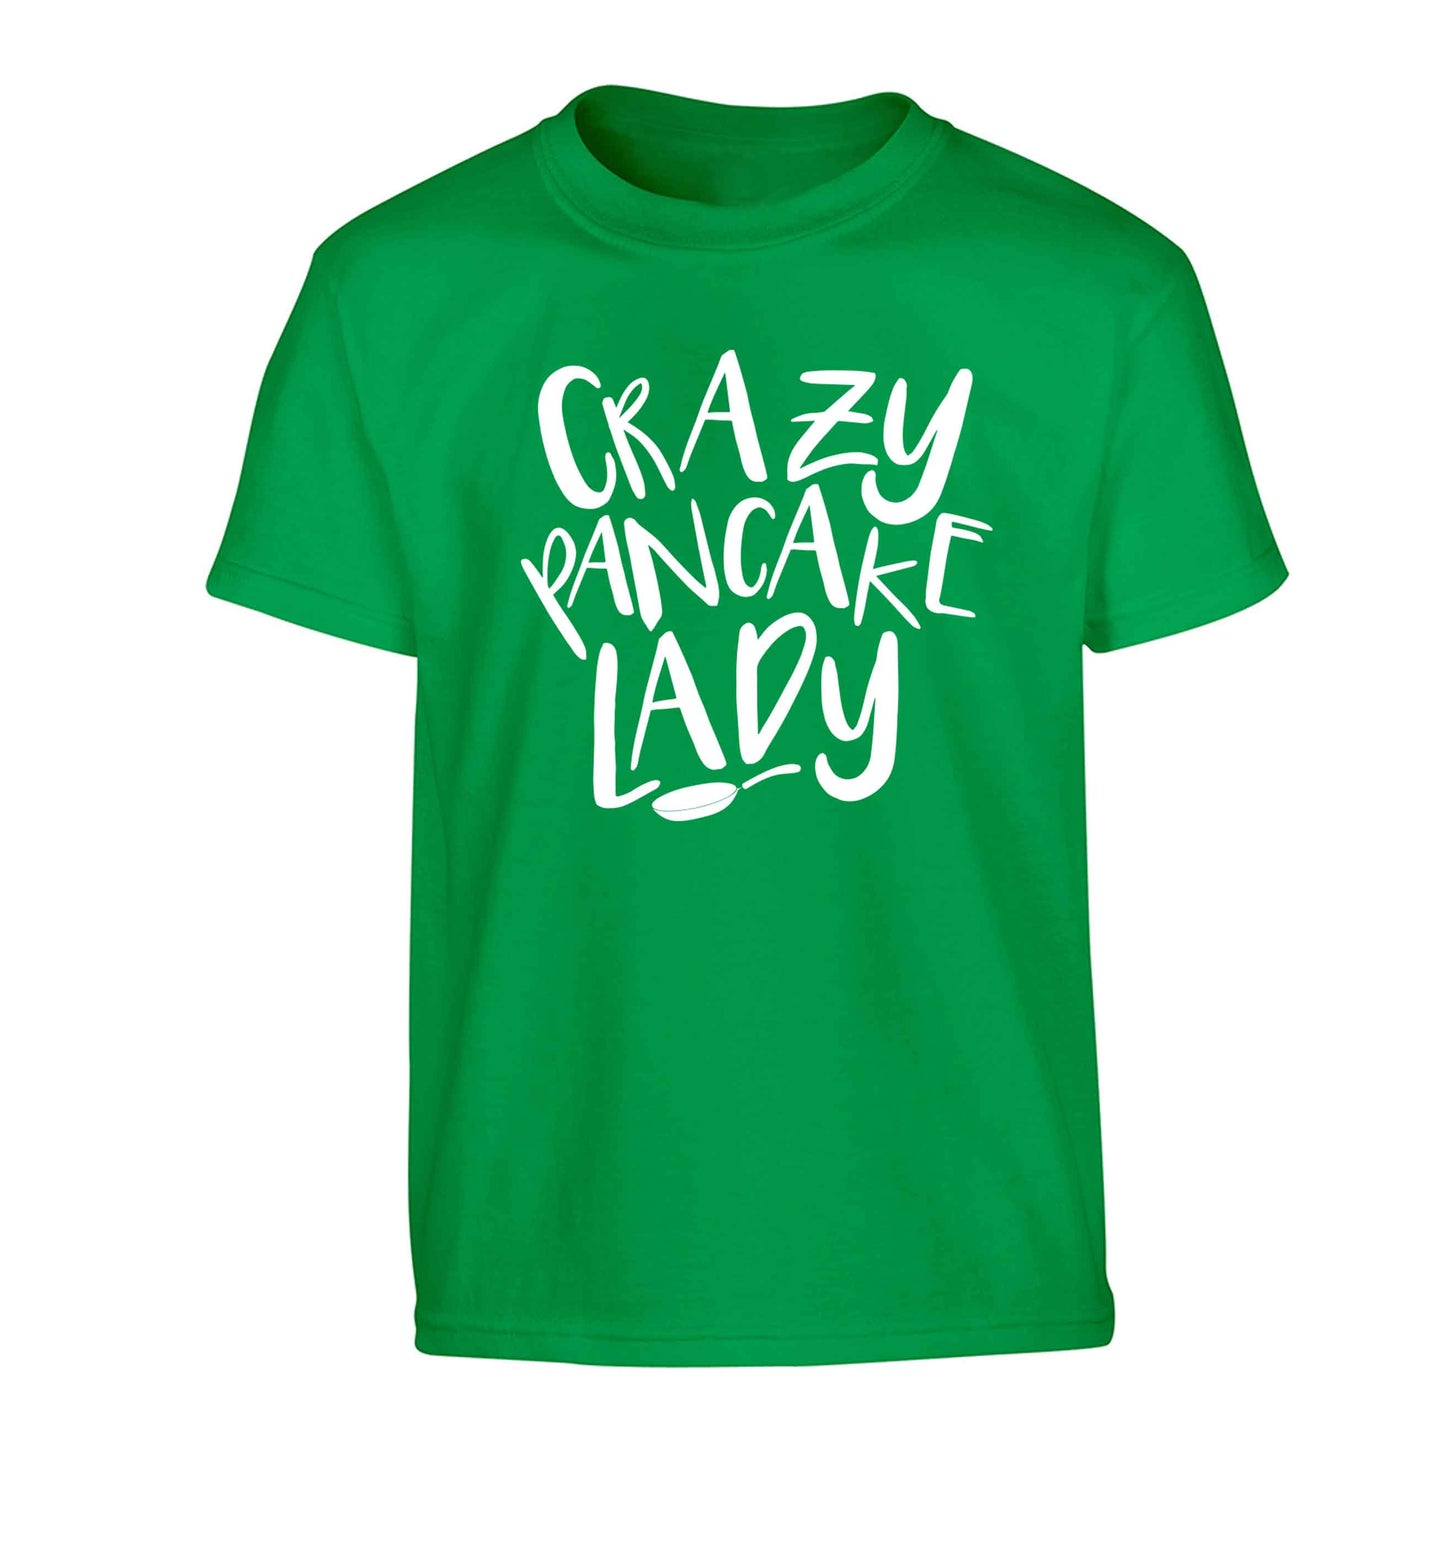 Crazy pancake lady Children's green Tshirt 12-13 Years